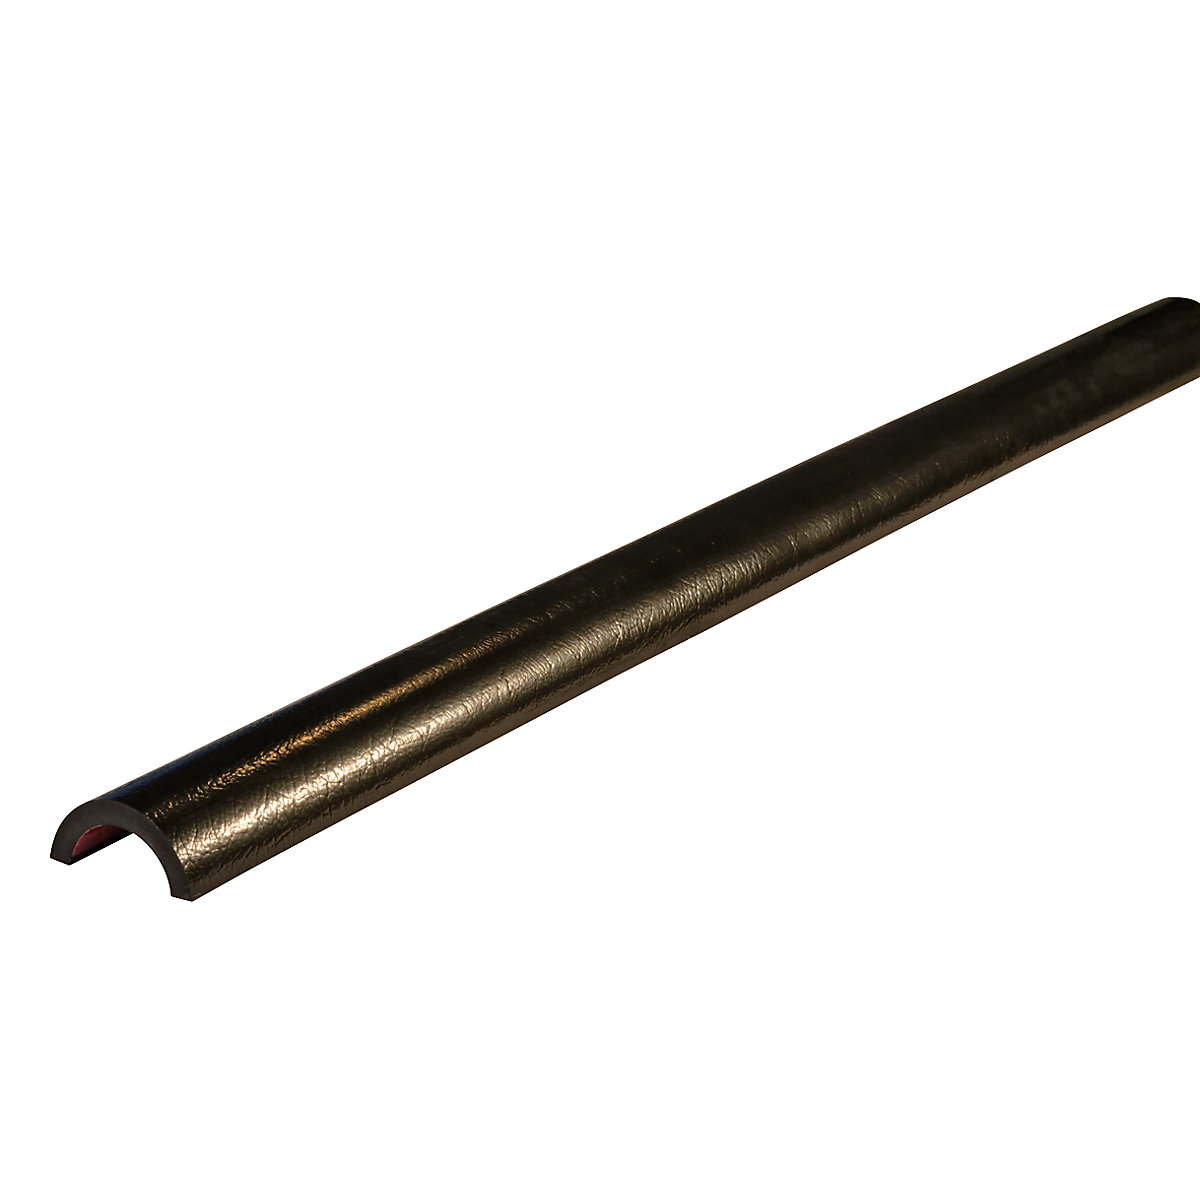 Knuffi®-buisbescherming – SHG, type R50, stuk van 1 m, zwart-11